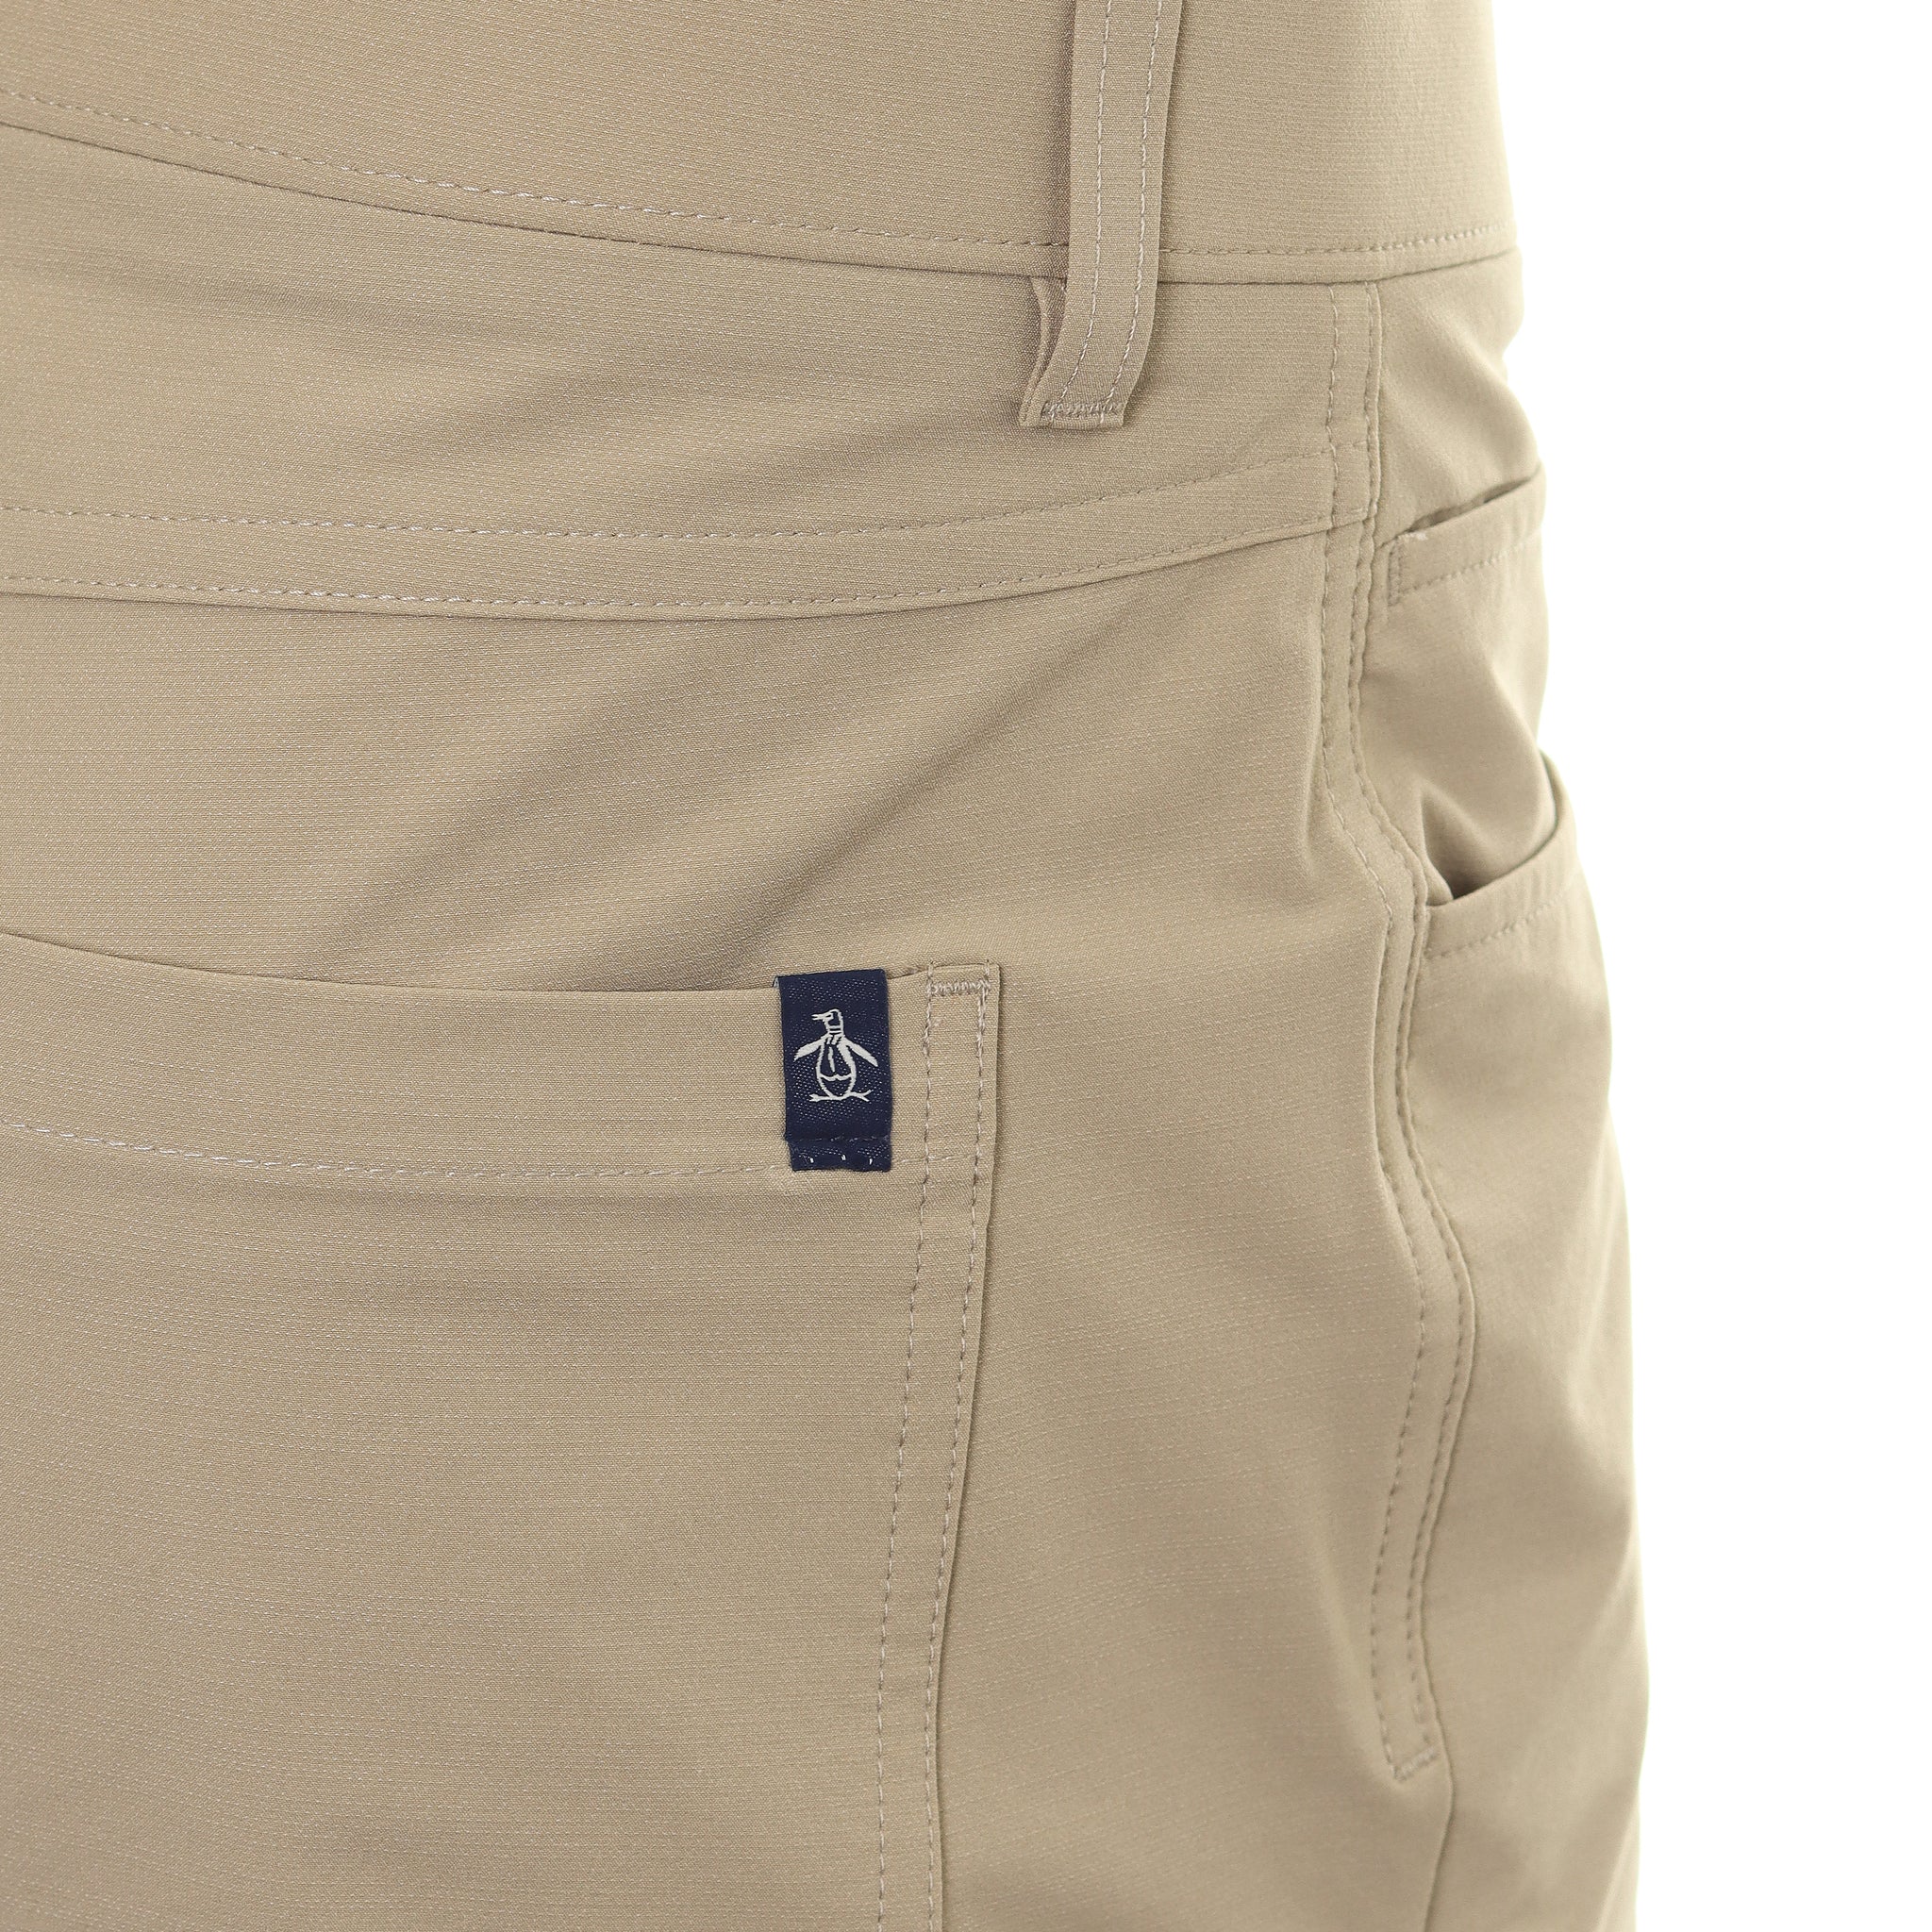 Original Penguin Golf 5 Pocket Trousers